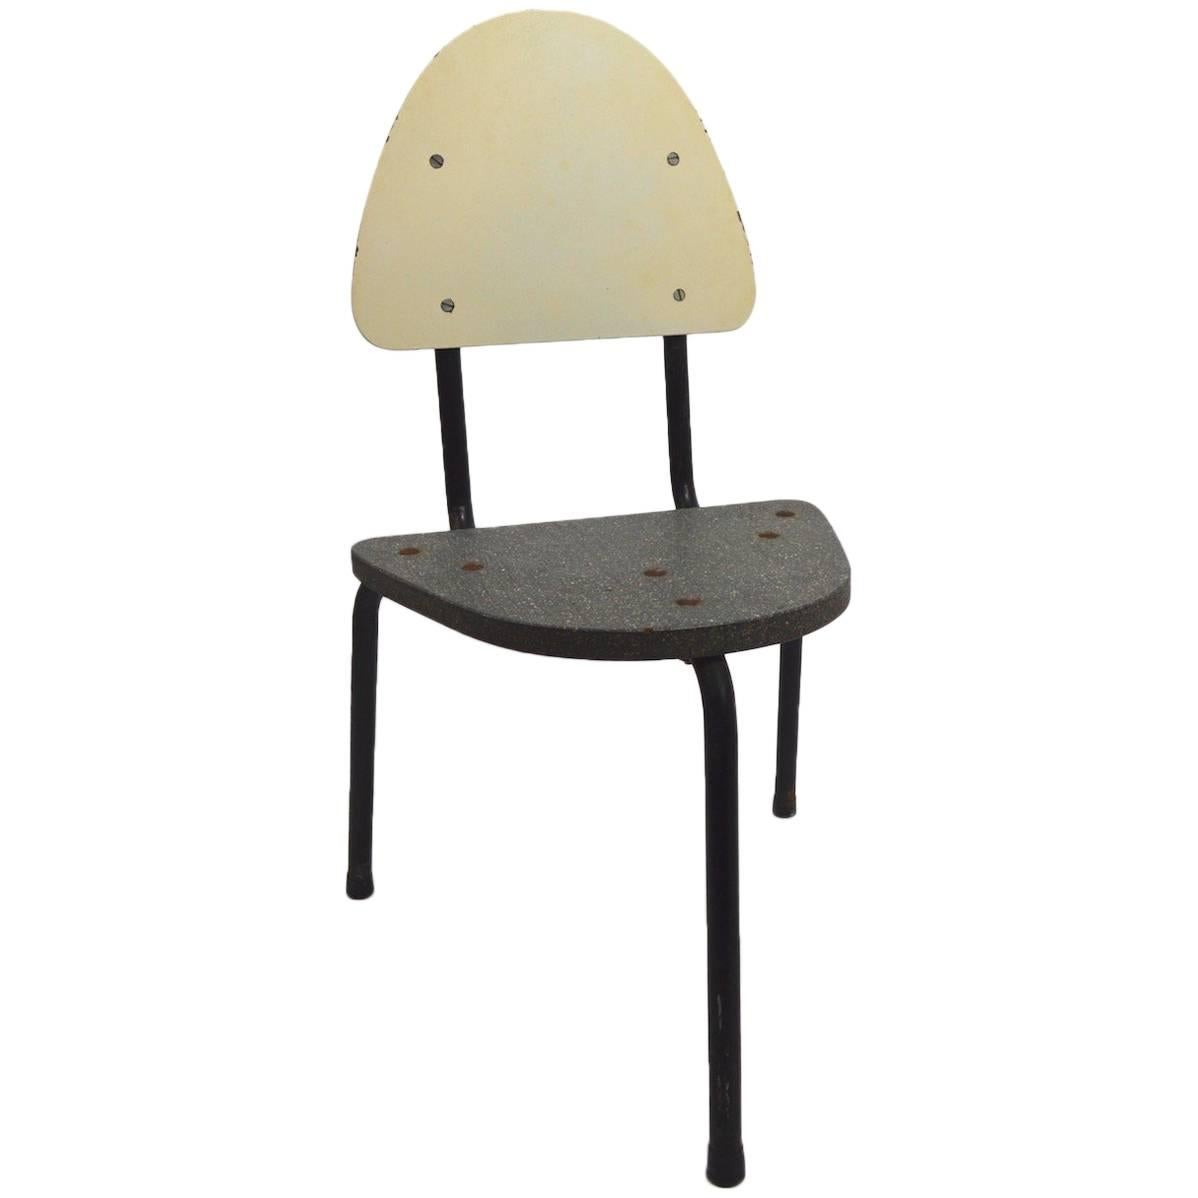 Modernist Childs Chair